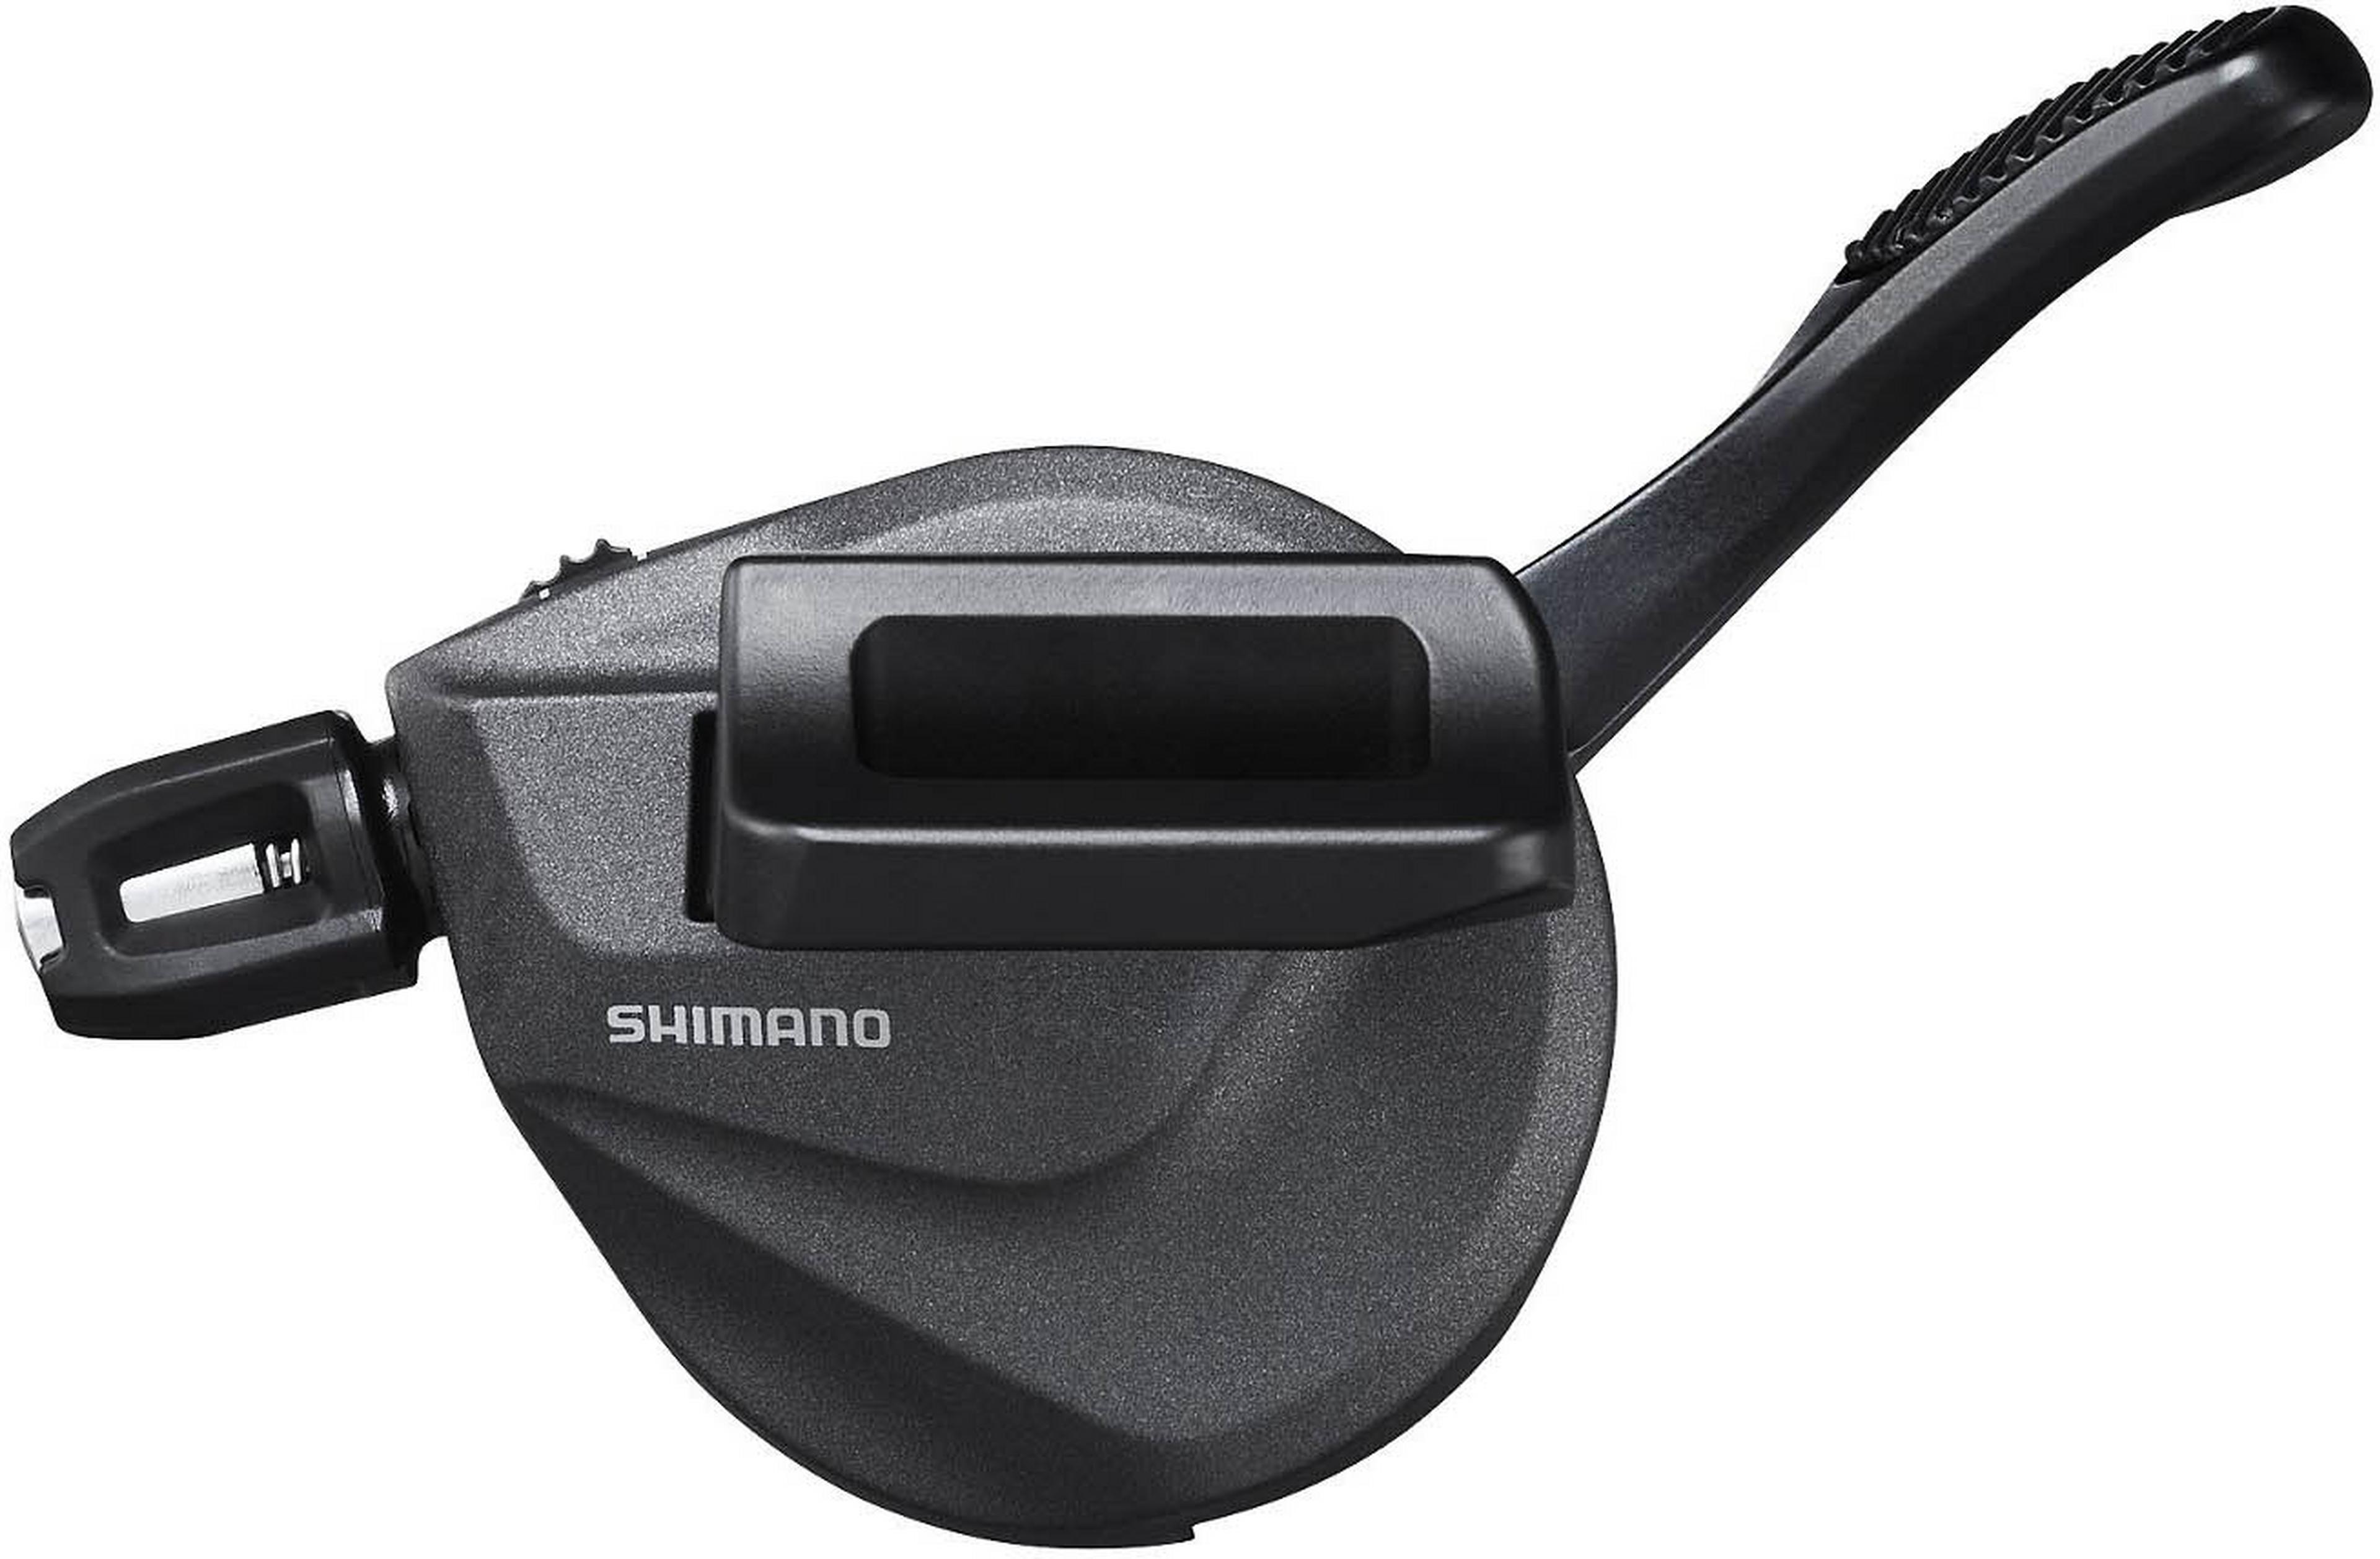 Shimano XT M8100 12 Speed Shifter